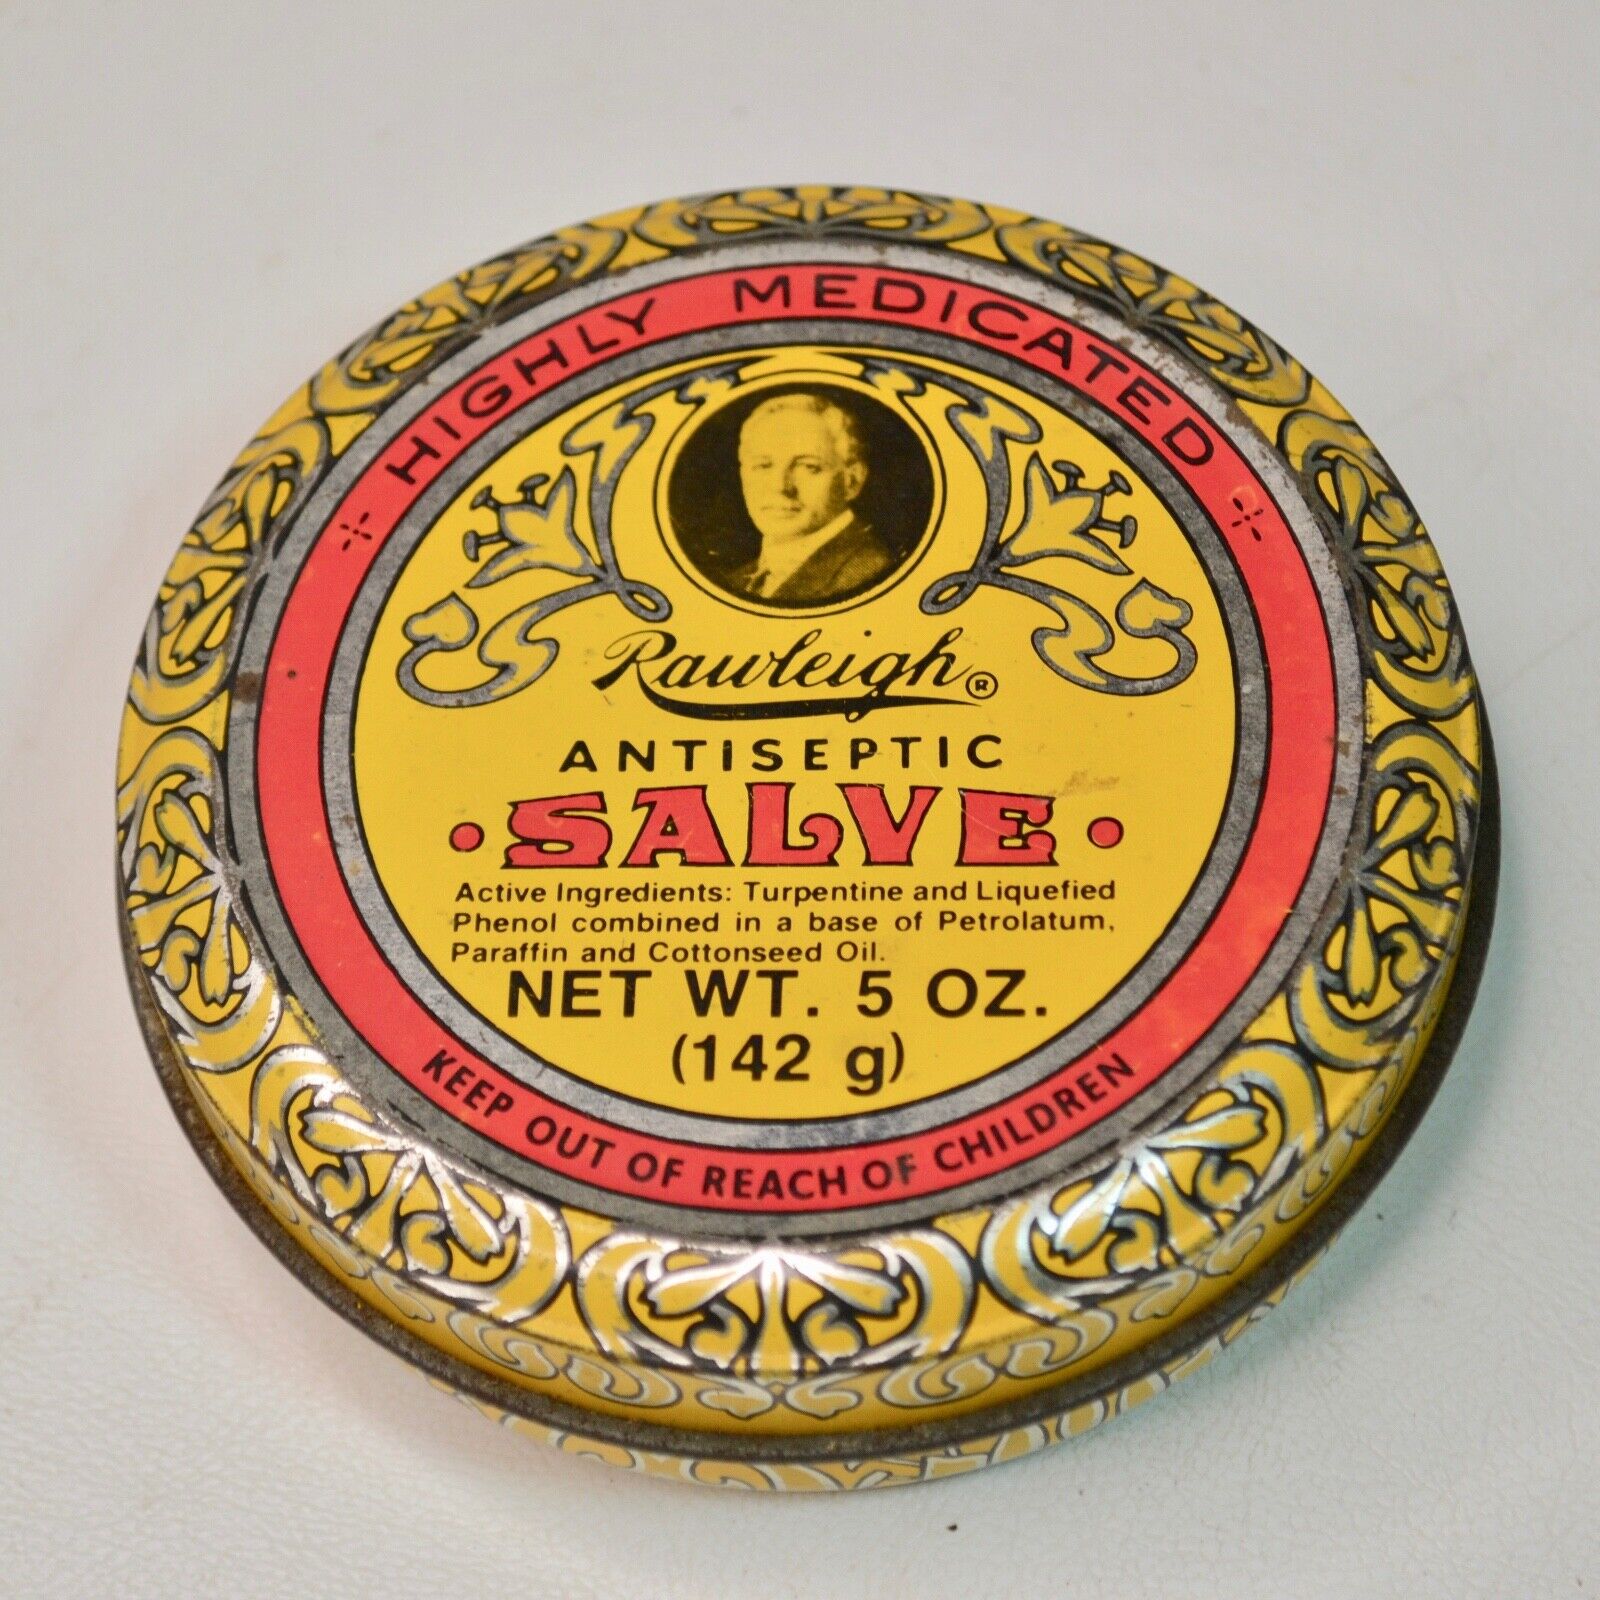 Vintage Rawleigh Antiseptic Salve 5 oz Container Tin Advertising Medical